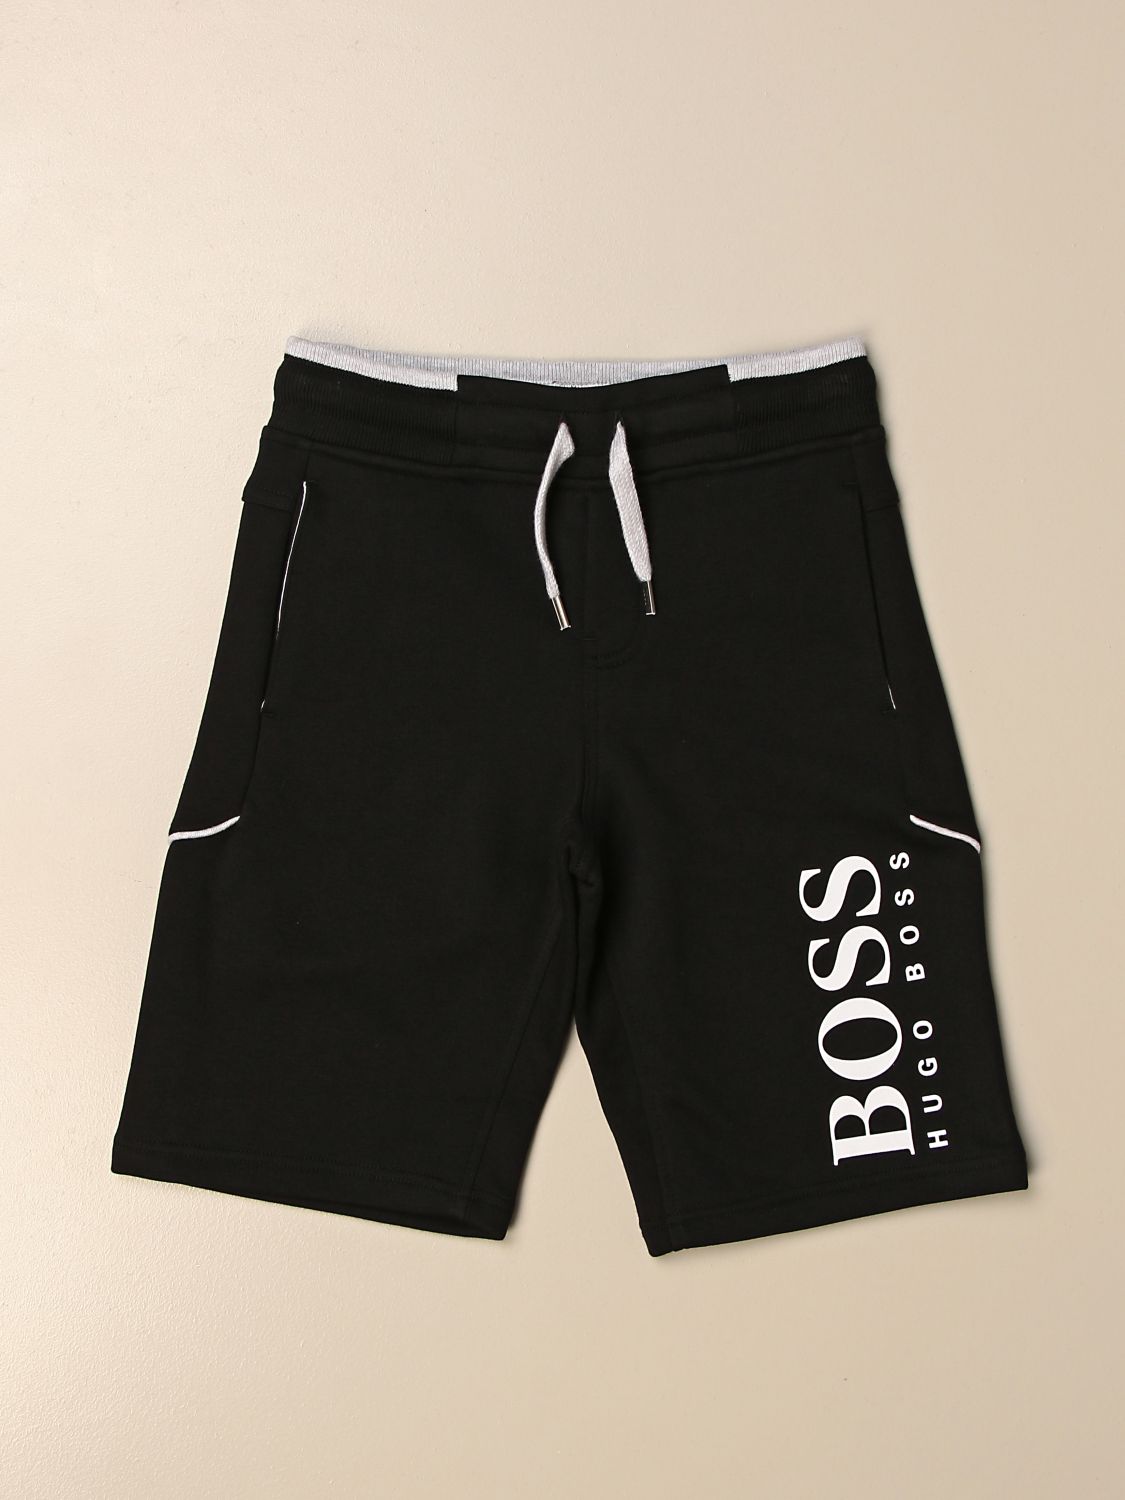 staart Kraan Veeg Hugo Boss Outlet: jogging shorts with logo - Black | Hugo Boss shorts  J24M28 online on GIGLIO.COM